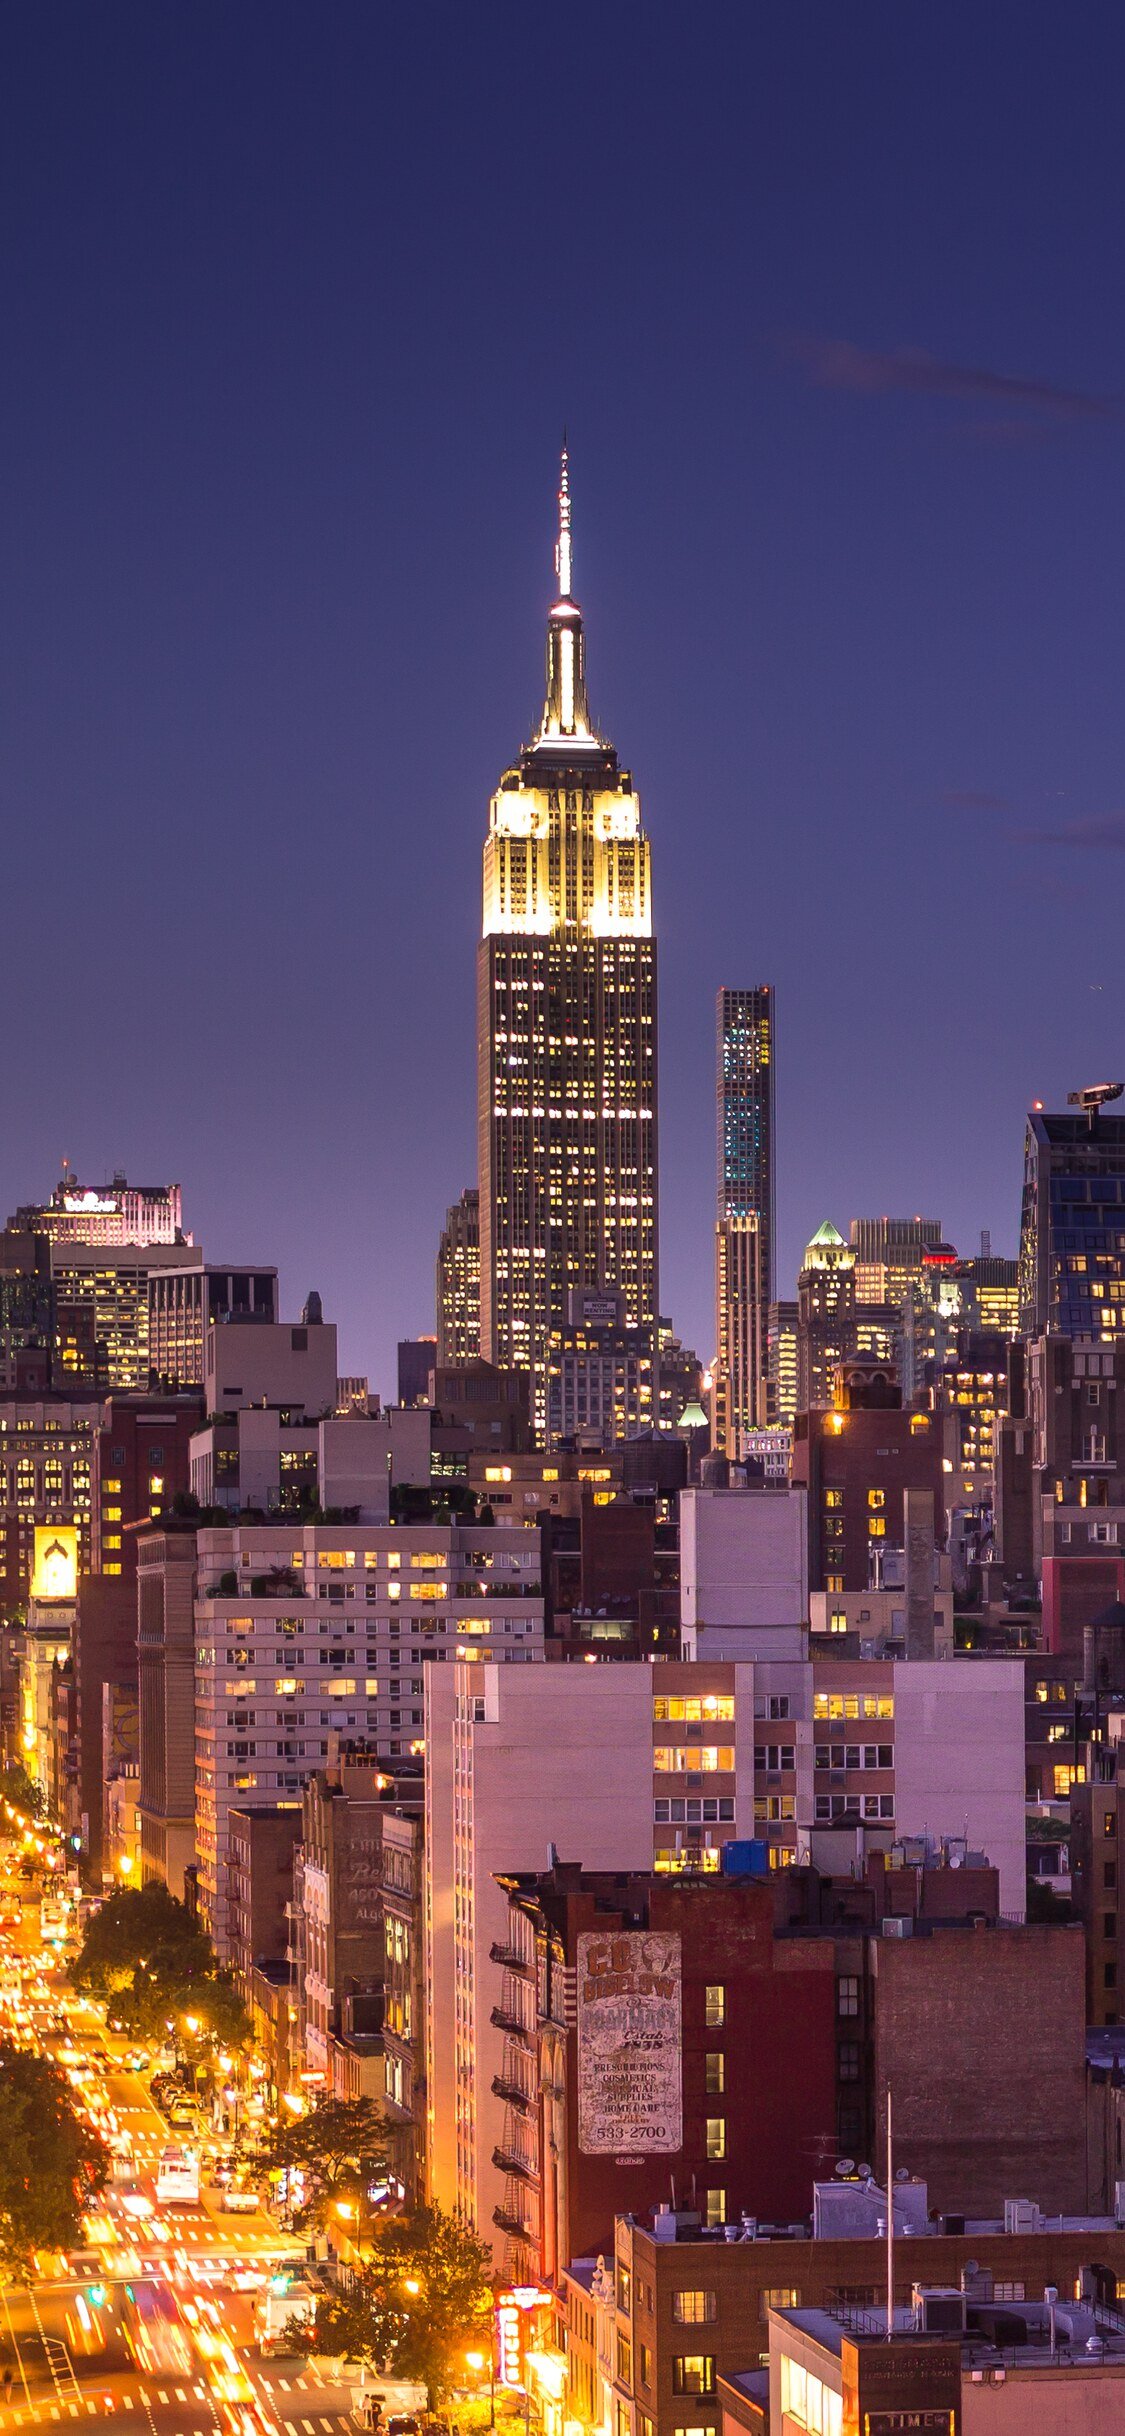 New York City - Free photo on Pixabay - Pixabay